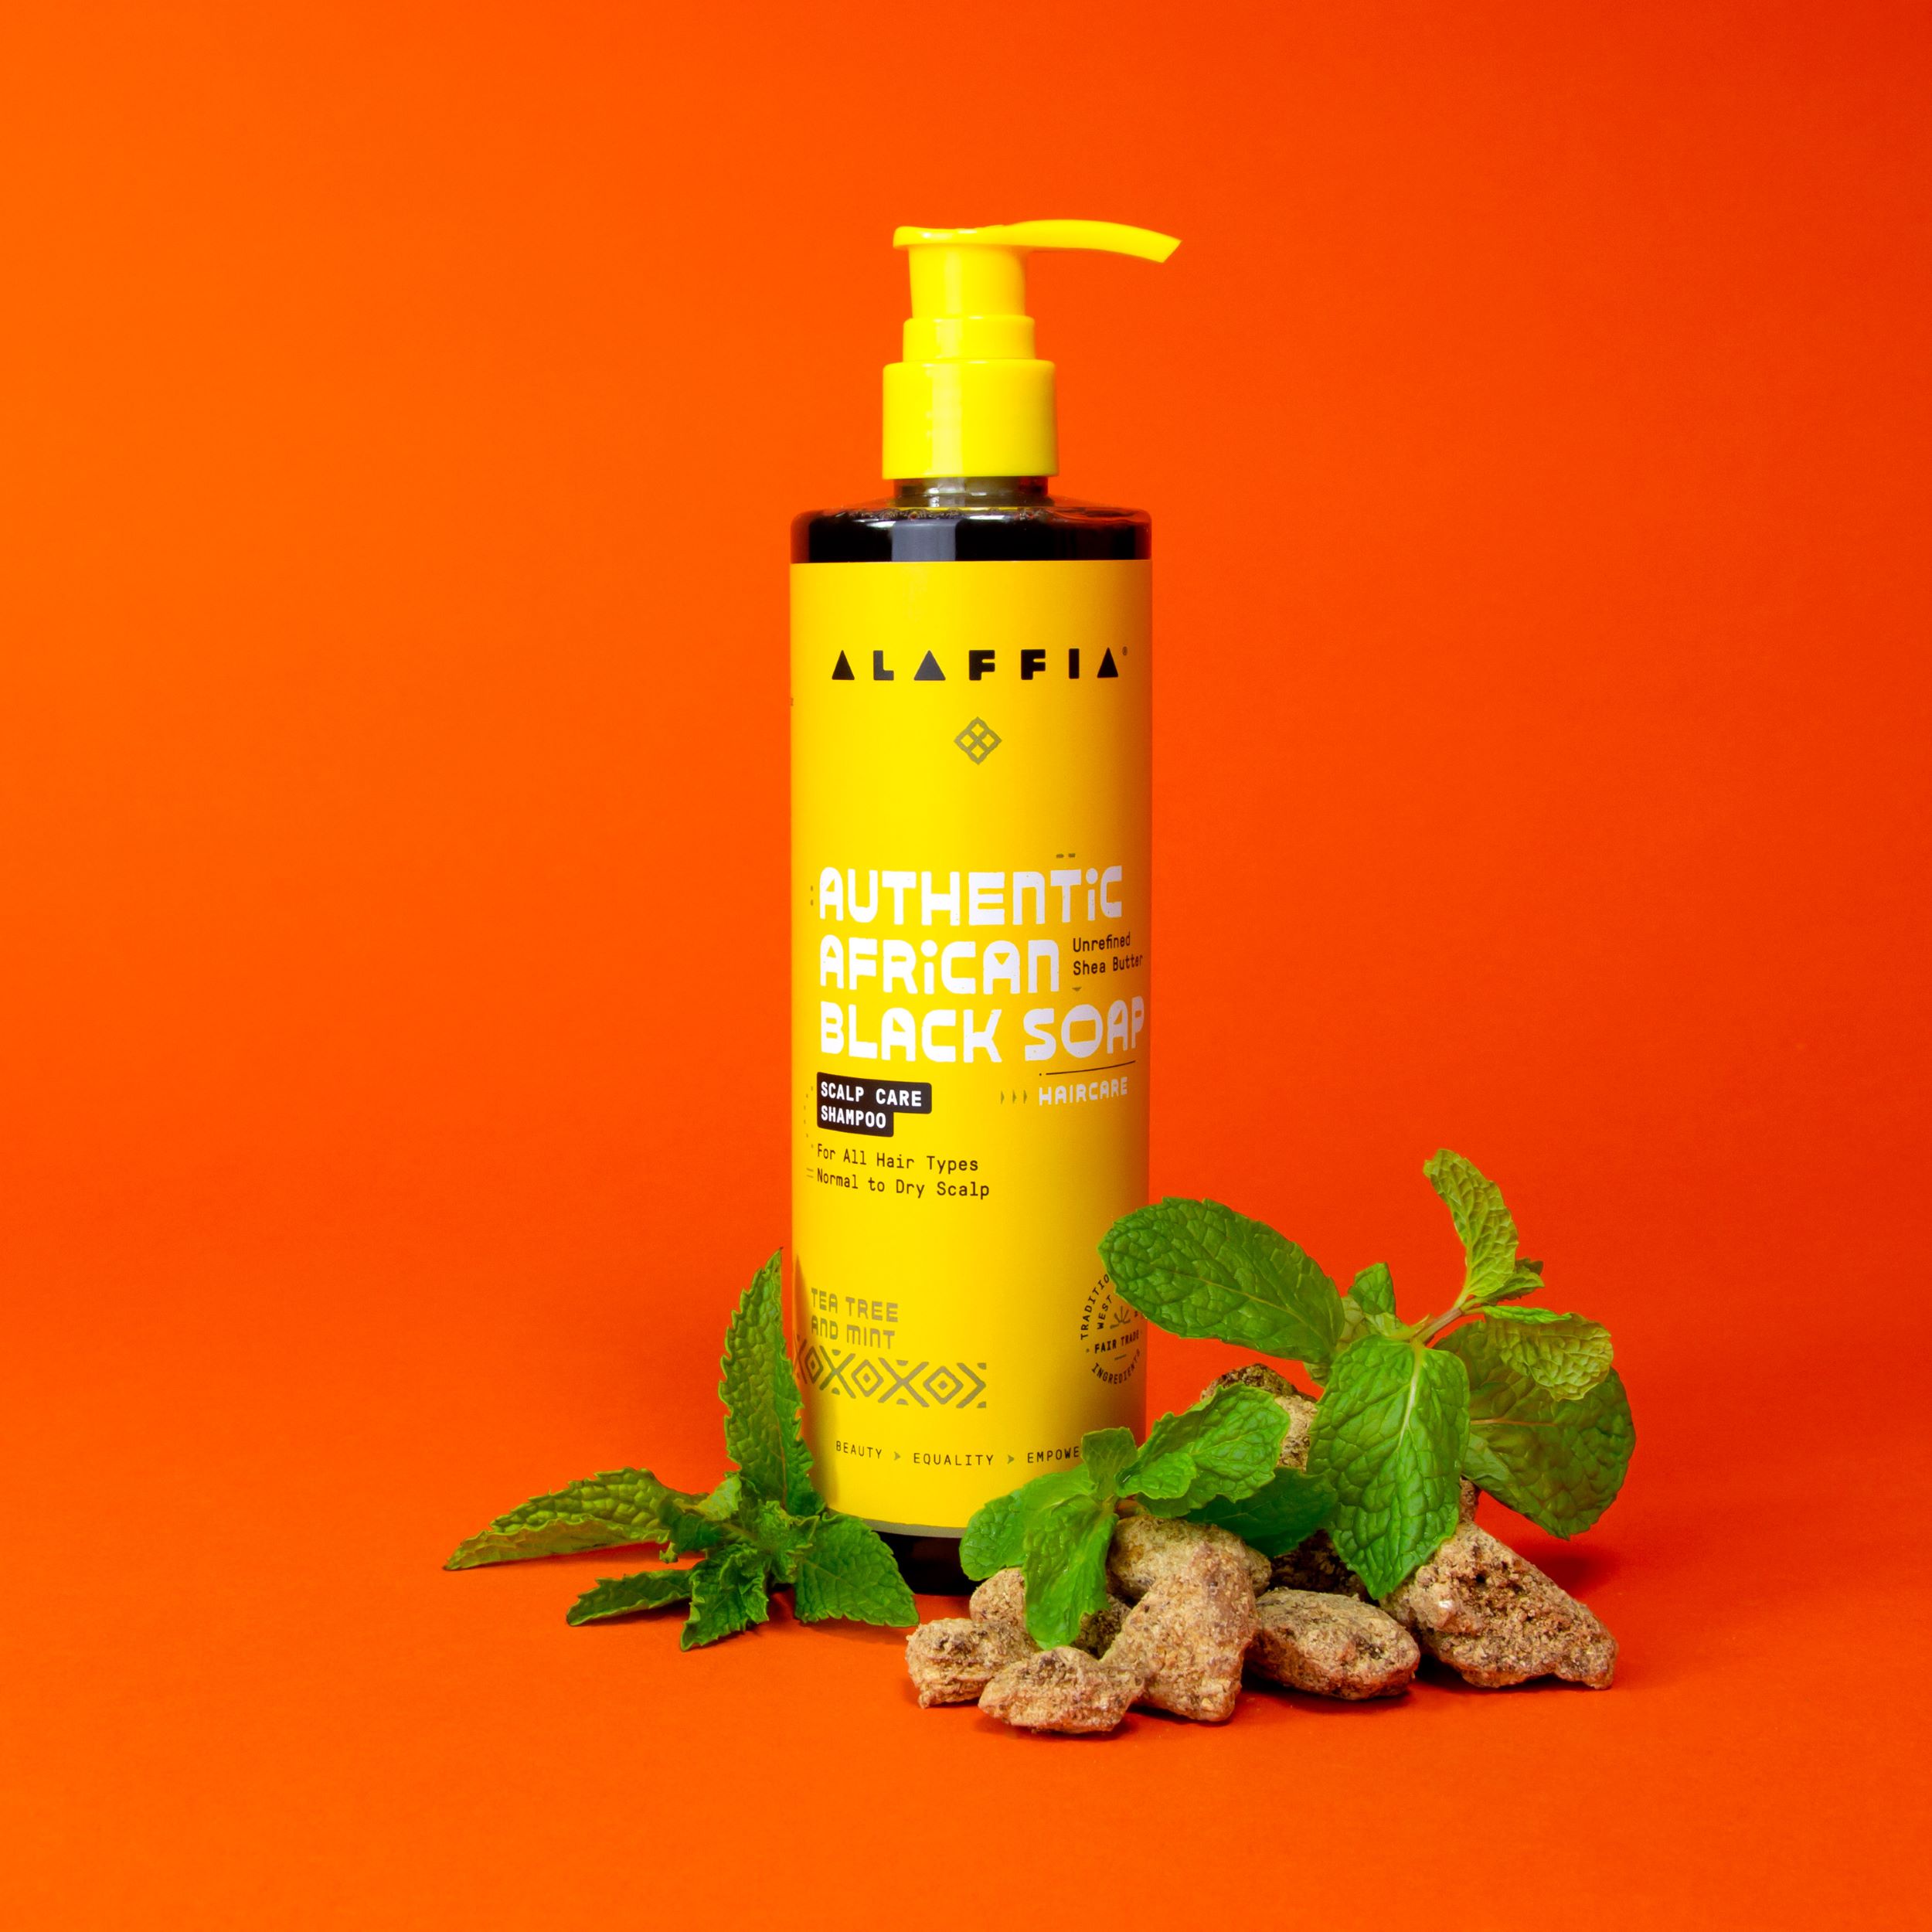 Alaffia African Black Soap Tea Tree and Mint Scalp Care Daily Shampoo, 12 fl oz - image 3 of 15